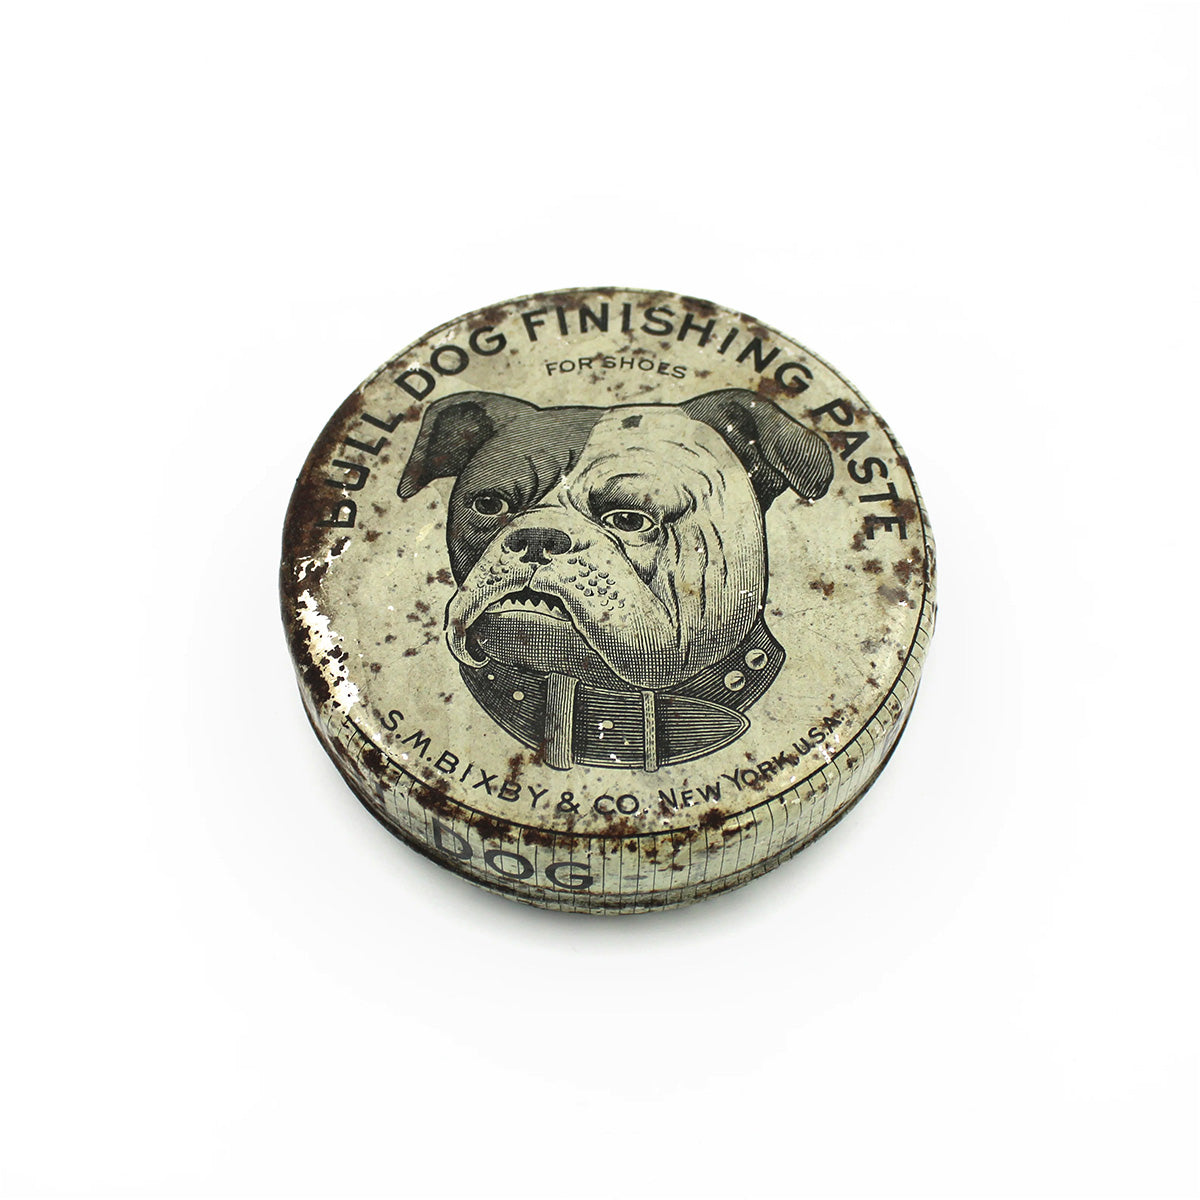 RARE Vintage Bulldog Paste Can (c.1880s) - SOLD